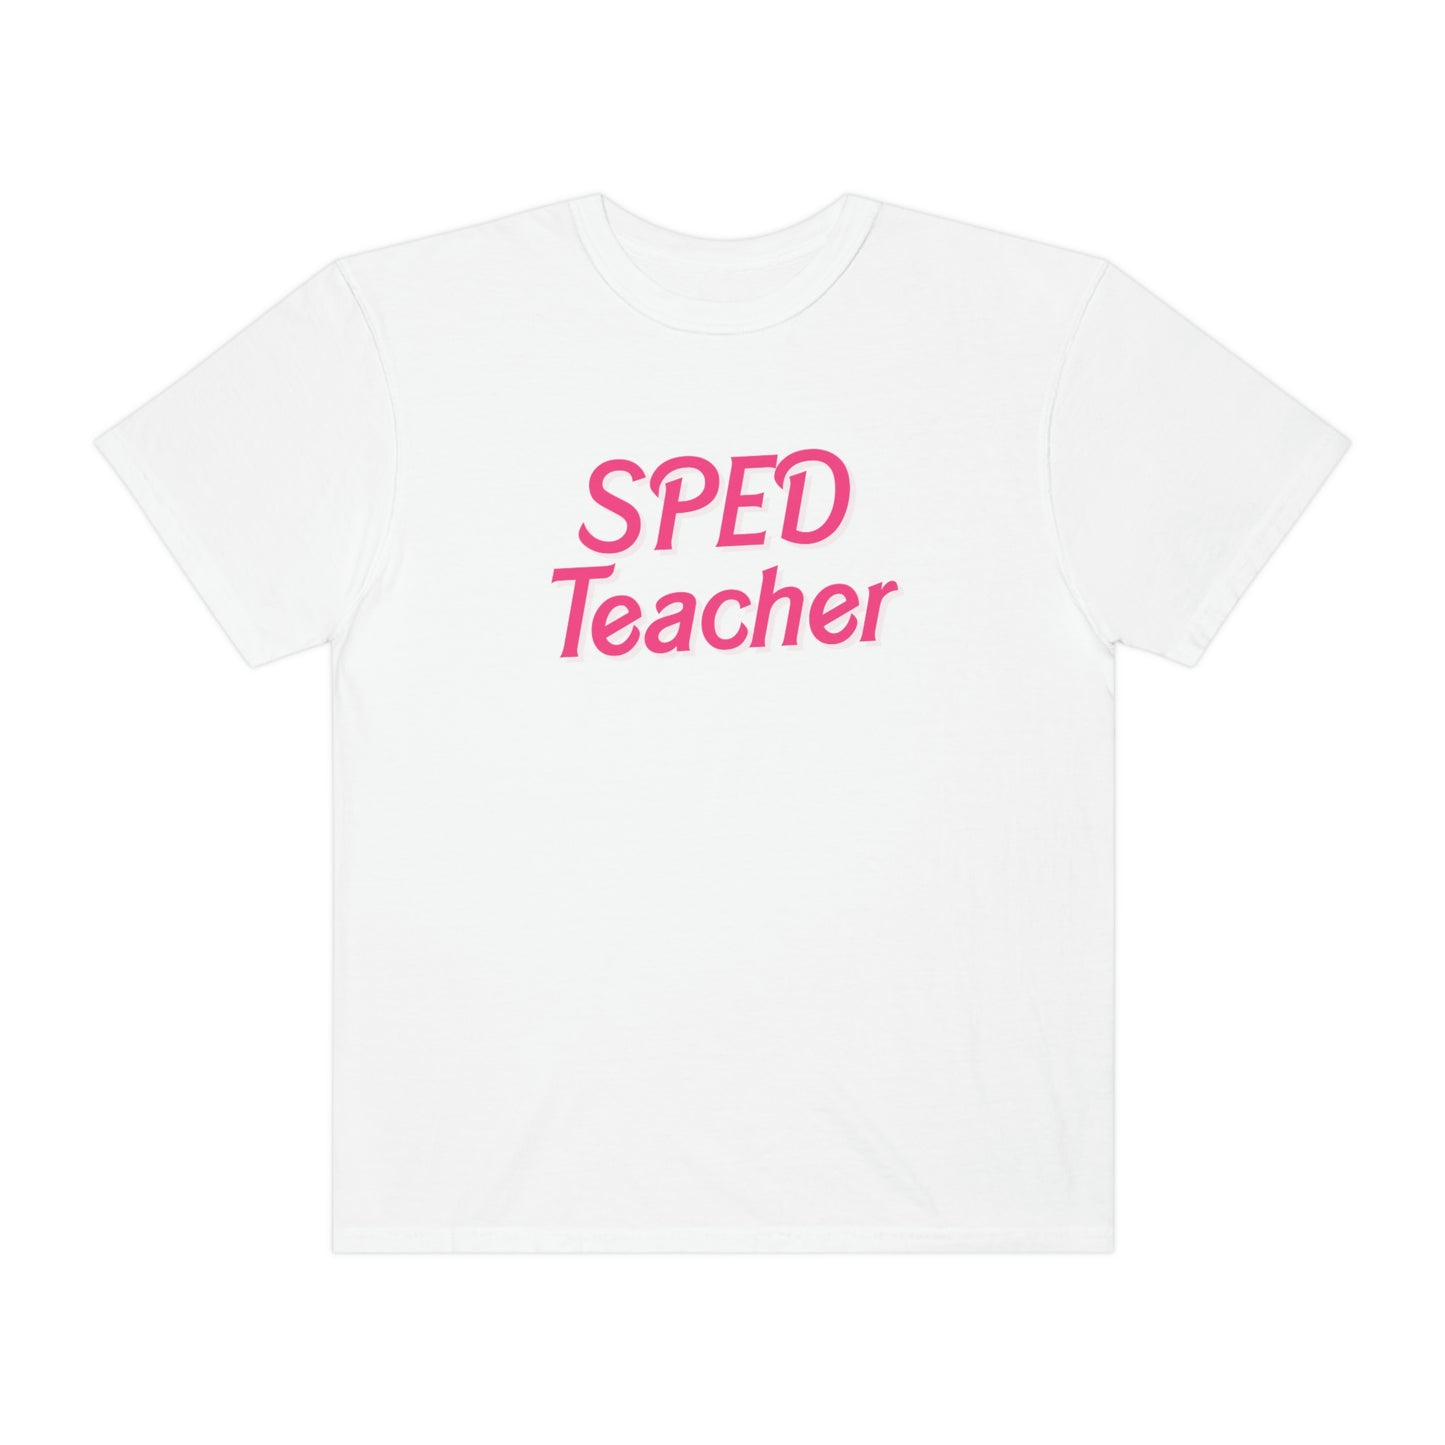 Pink SPED Teacher Comfort Colors T-Shirt